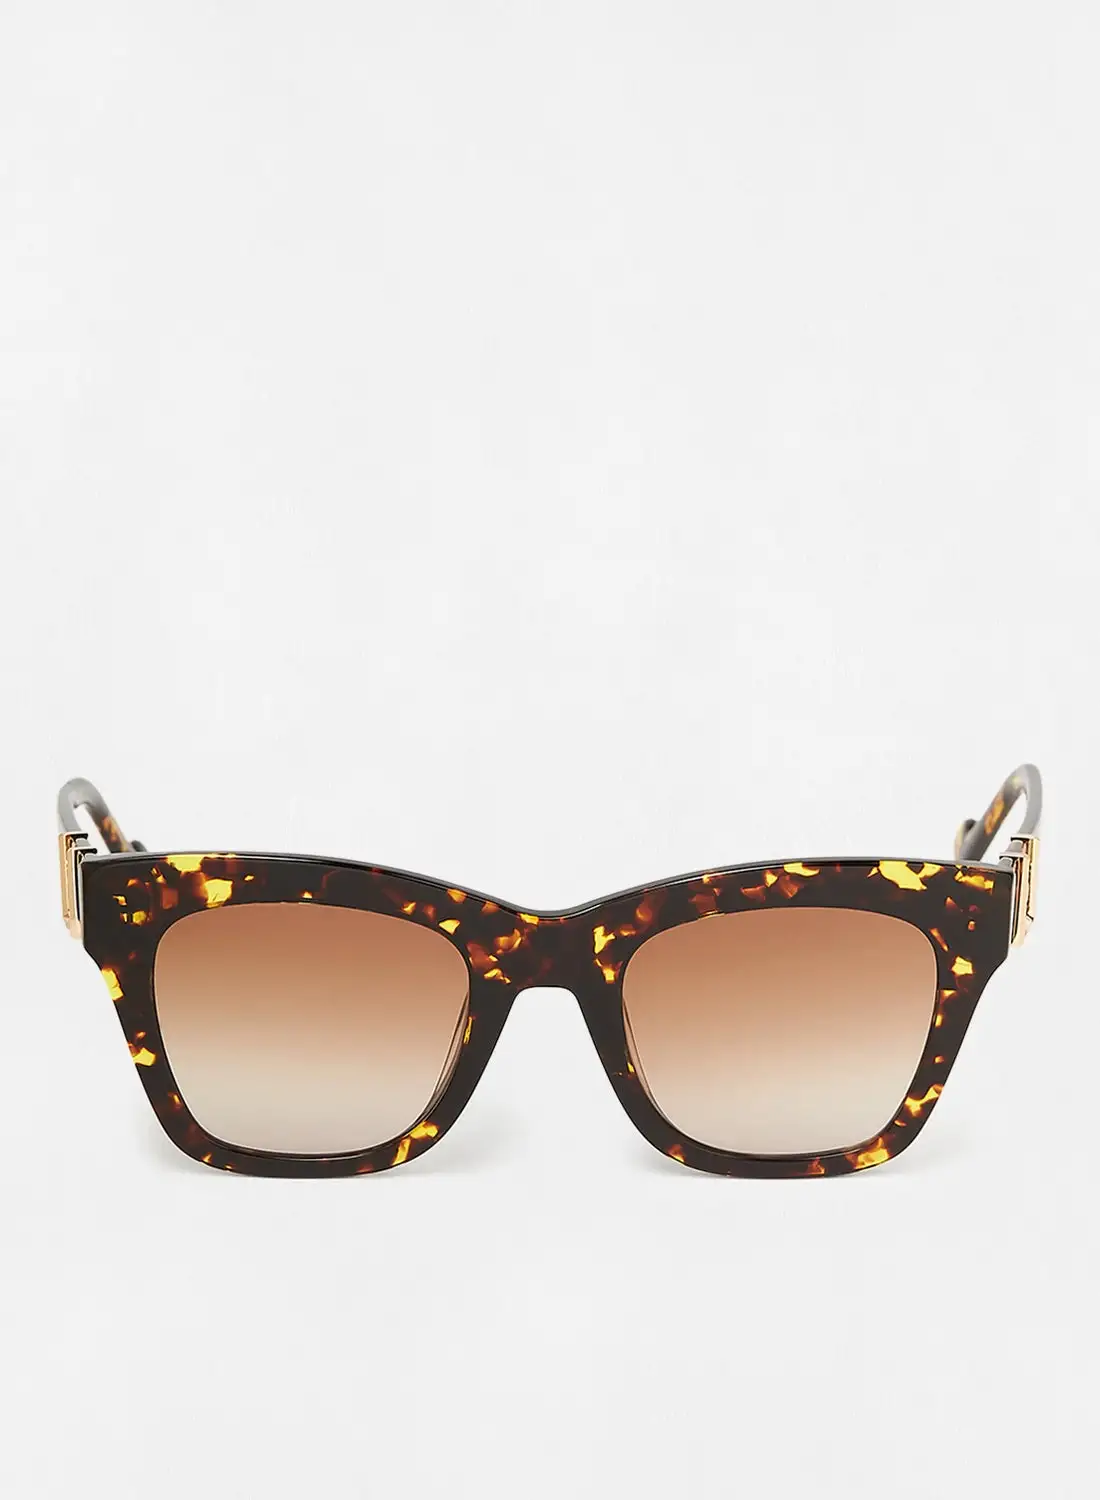 Liu Jo Women's Tortoiseshell Frame Sunglasses